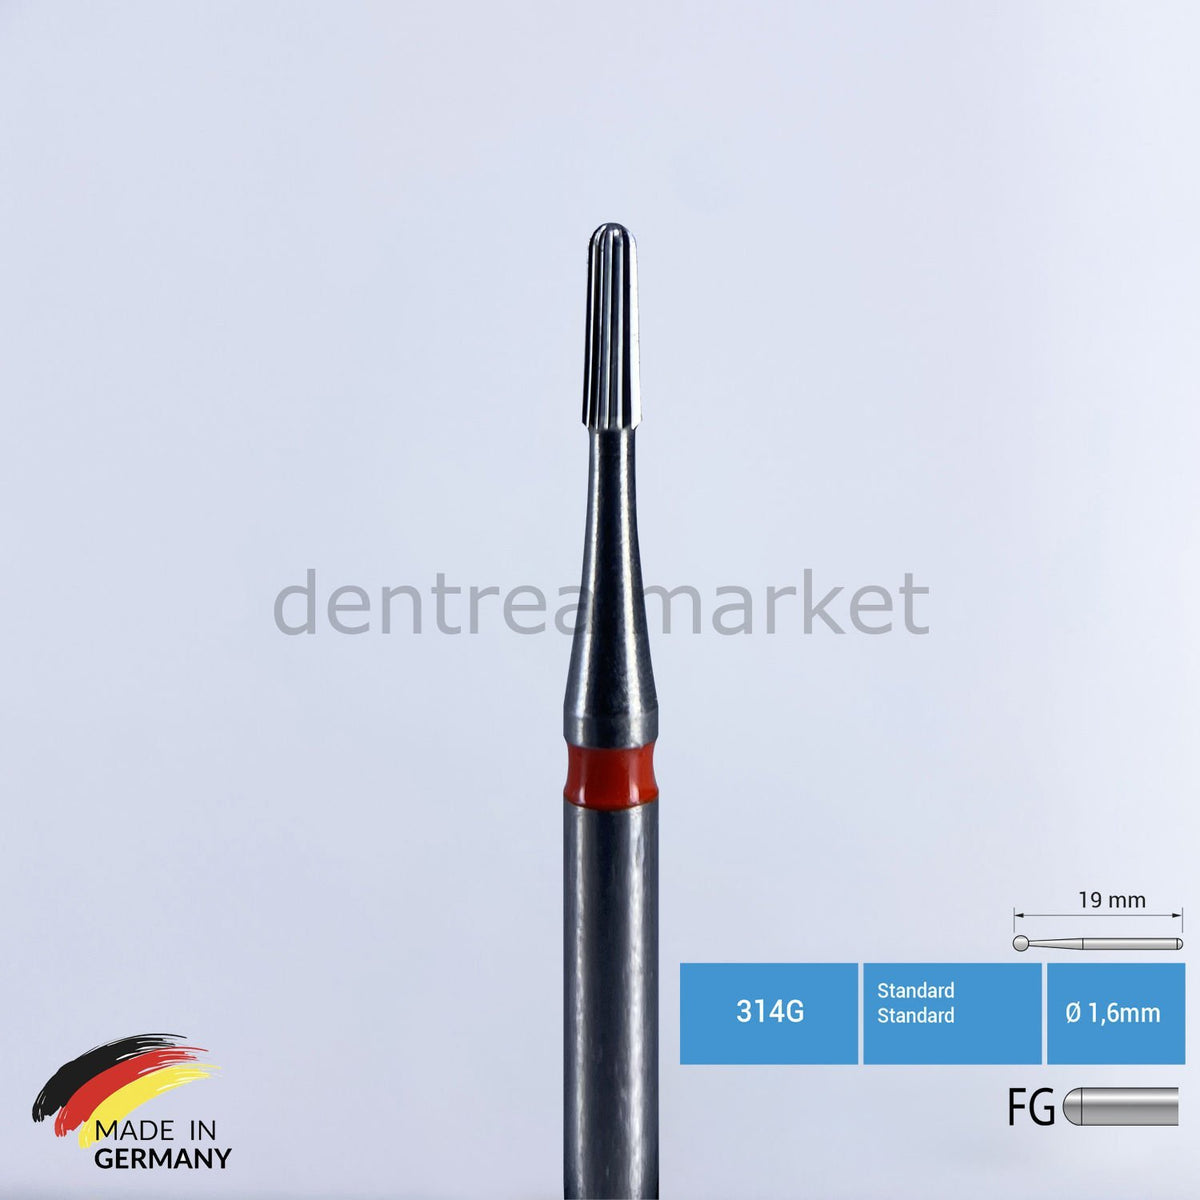 DentrealStore - Frank Dental Carpid Composite Finishing & Polishing Bur - C247 - for Air Turbine